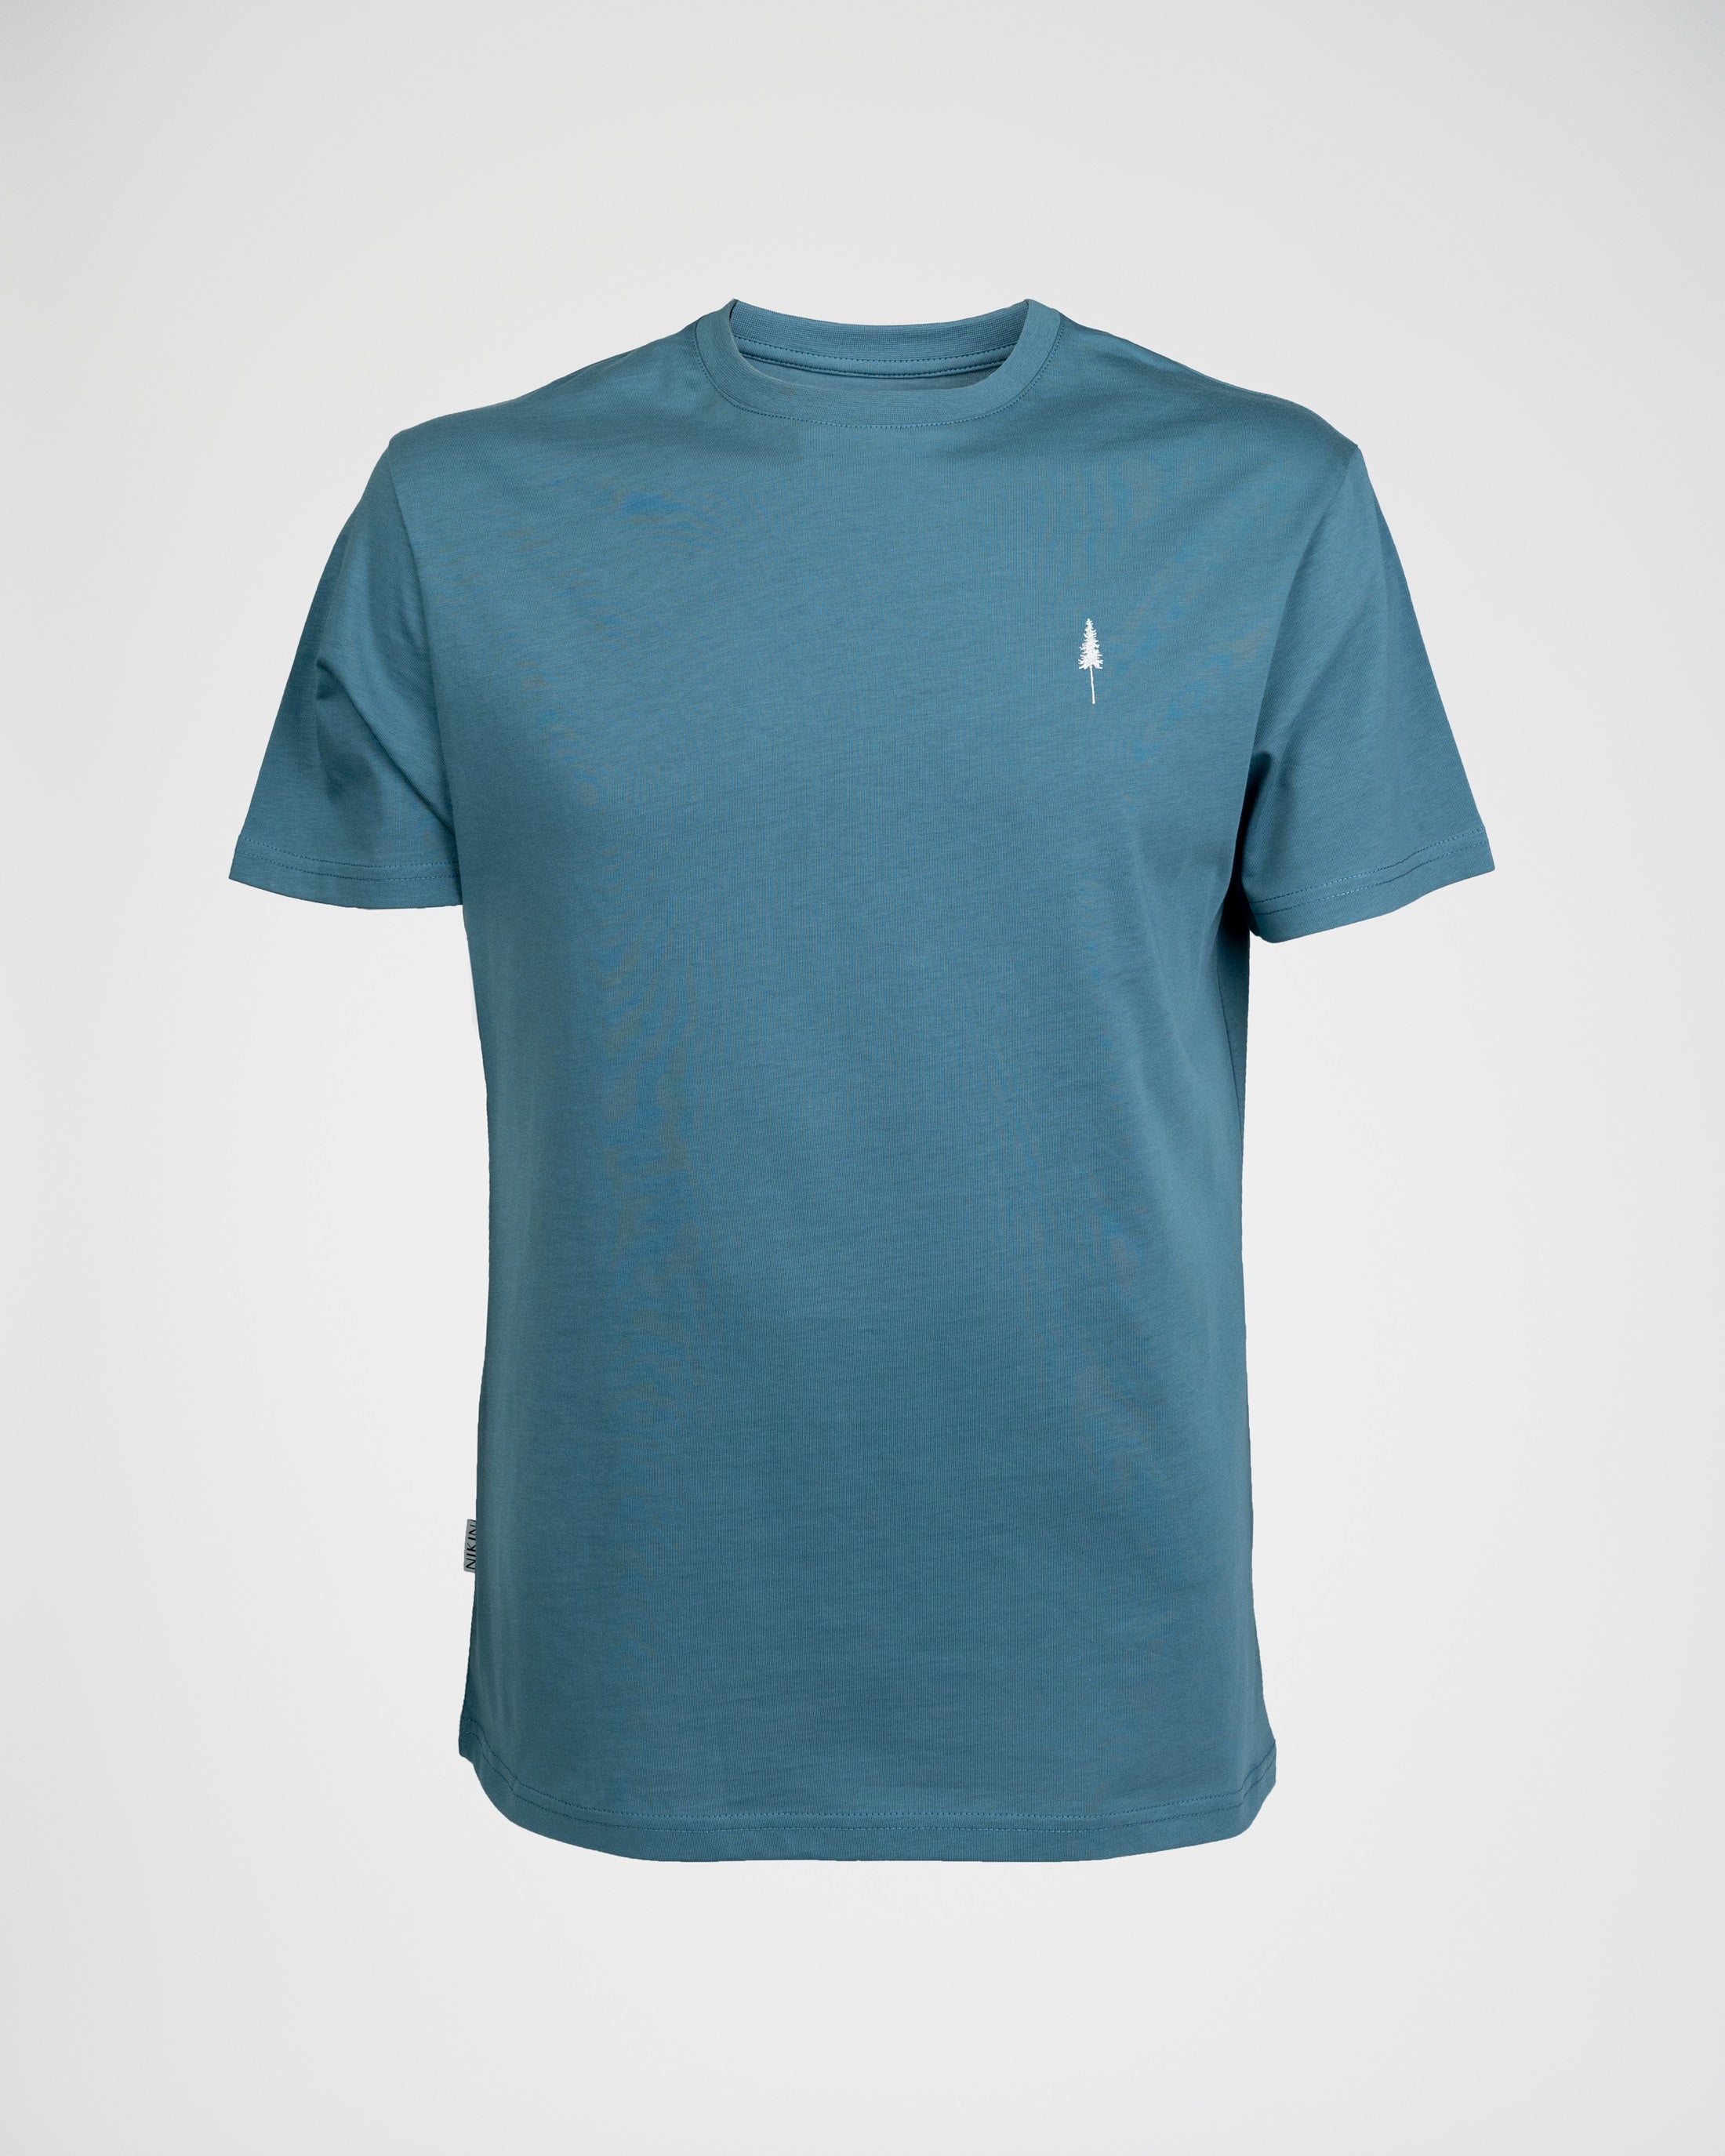 Men's organic cotton T-shirt Treeshirt Faded Teal